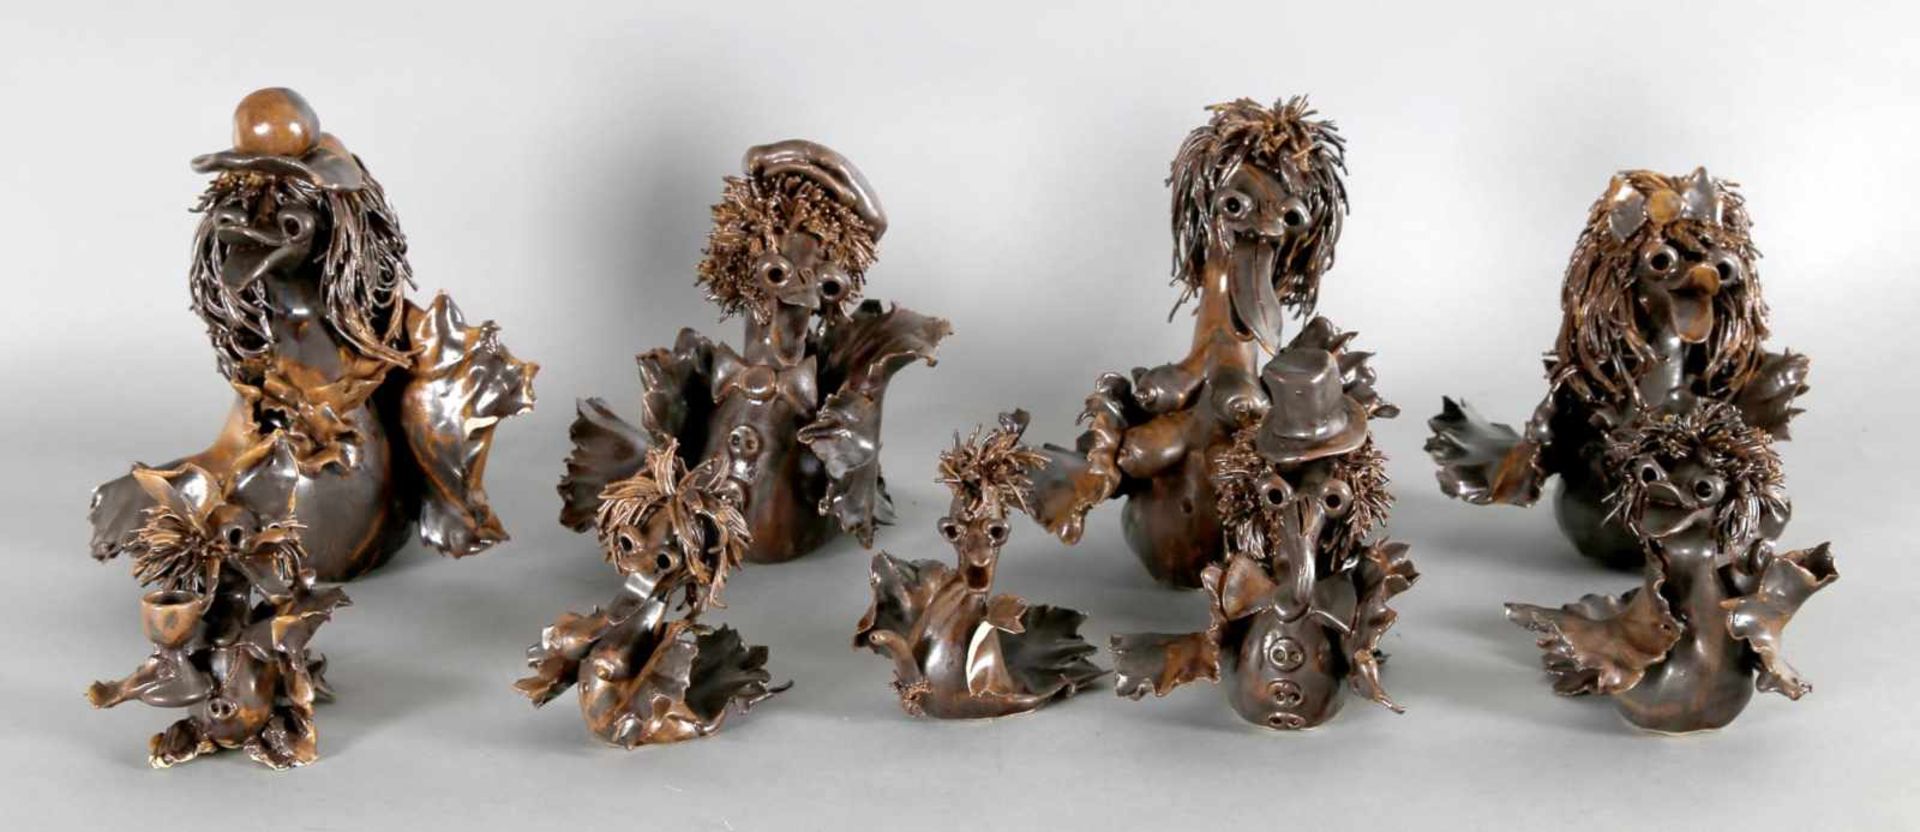 Ingrid Zinkgraf, Pfälzer Elwetridsche (Vögel), Keramik9 Skulpturen, vogelartig mit Merkmalen von